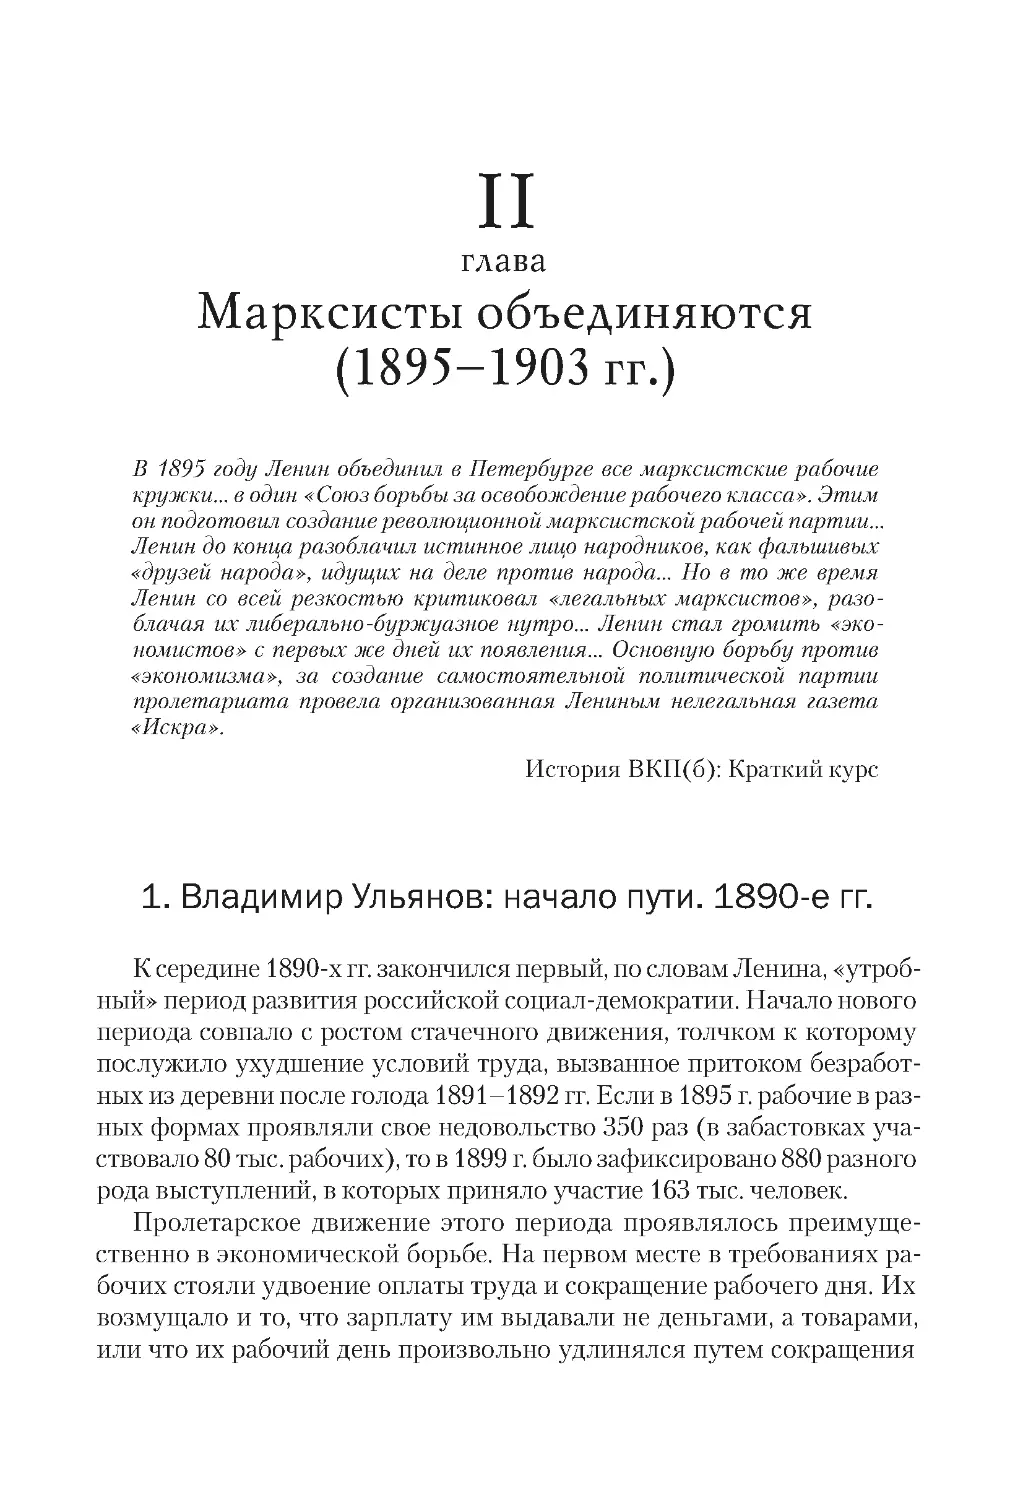 1. Владимир Ульянов: начало пути. 1890-е гг